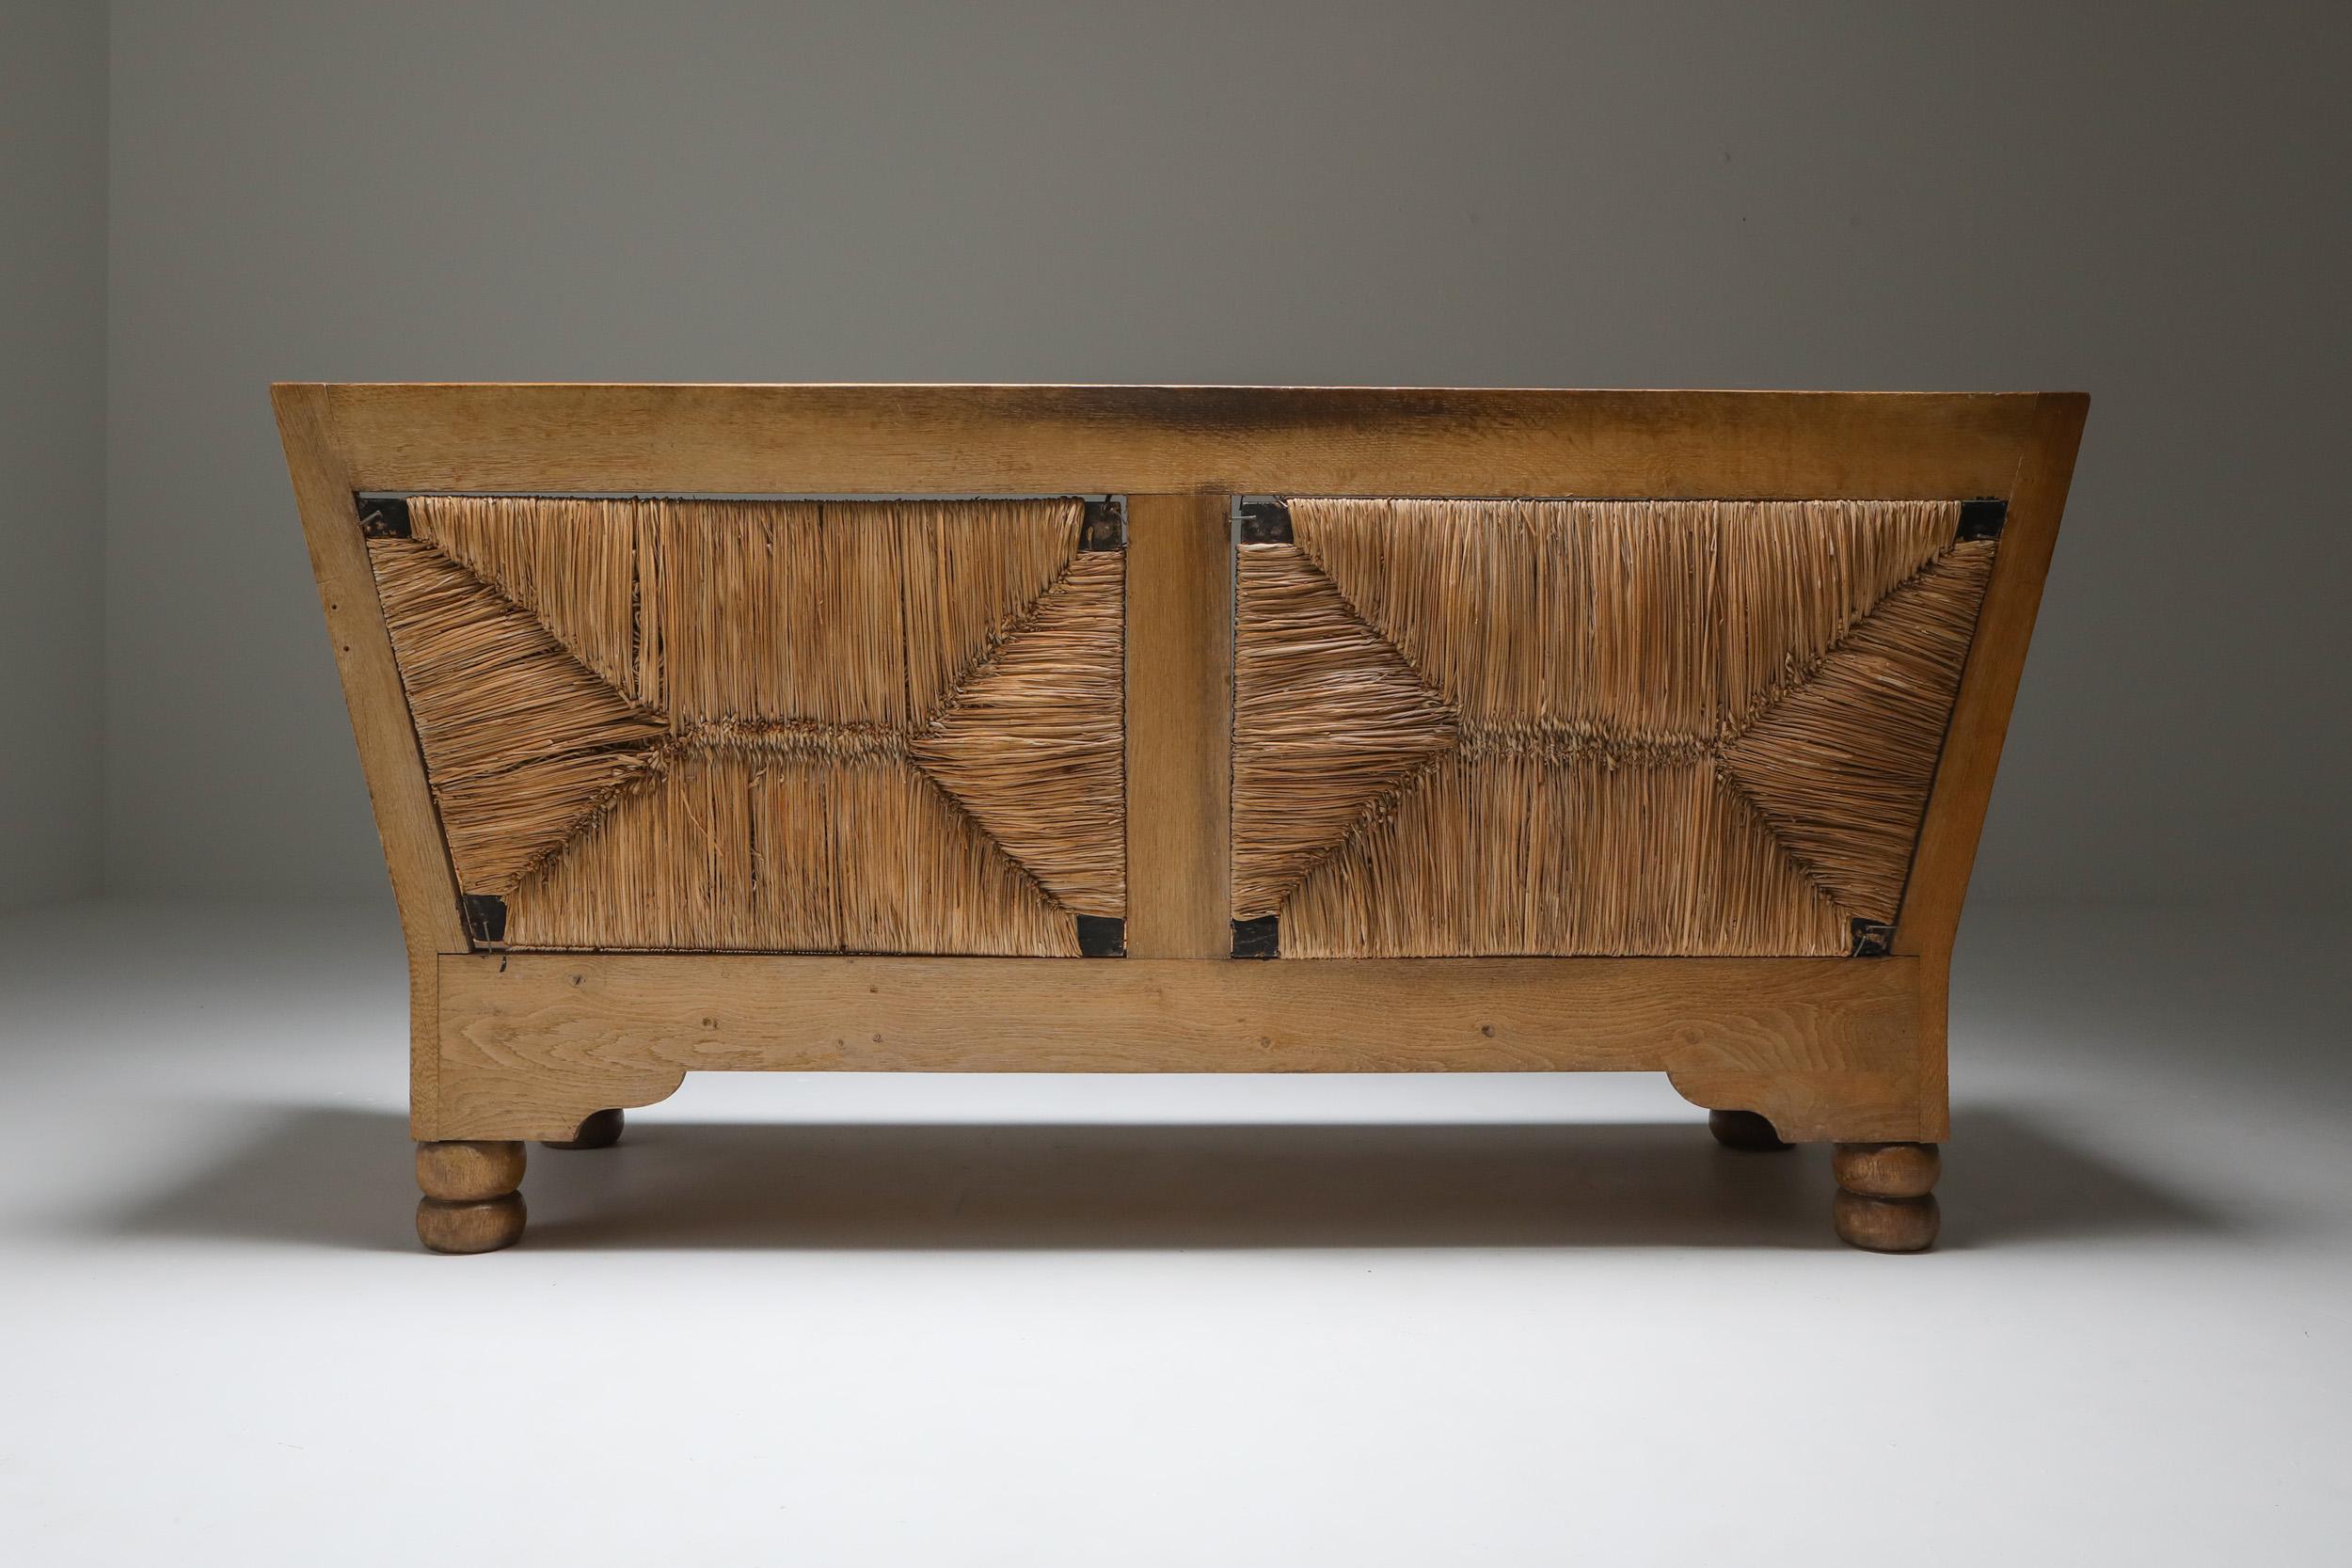 European Scandinavian Arts & Crafts Sofa Bench in Oak and Straw